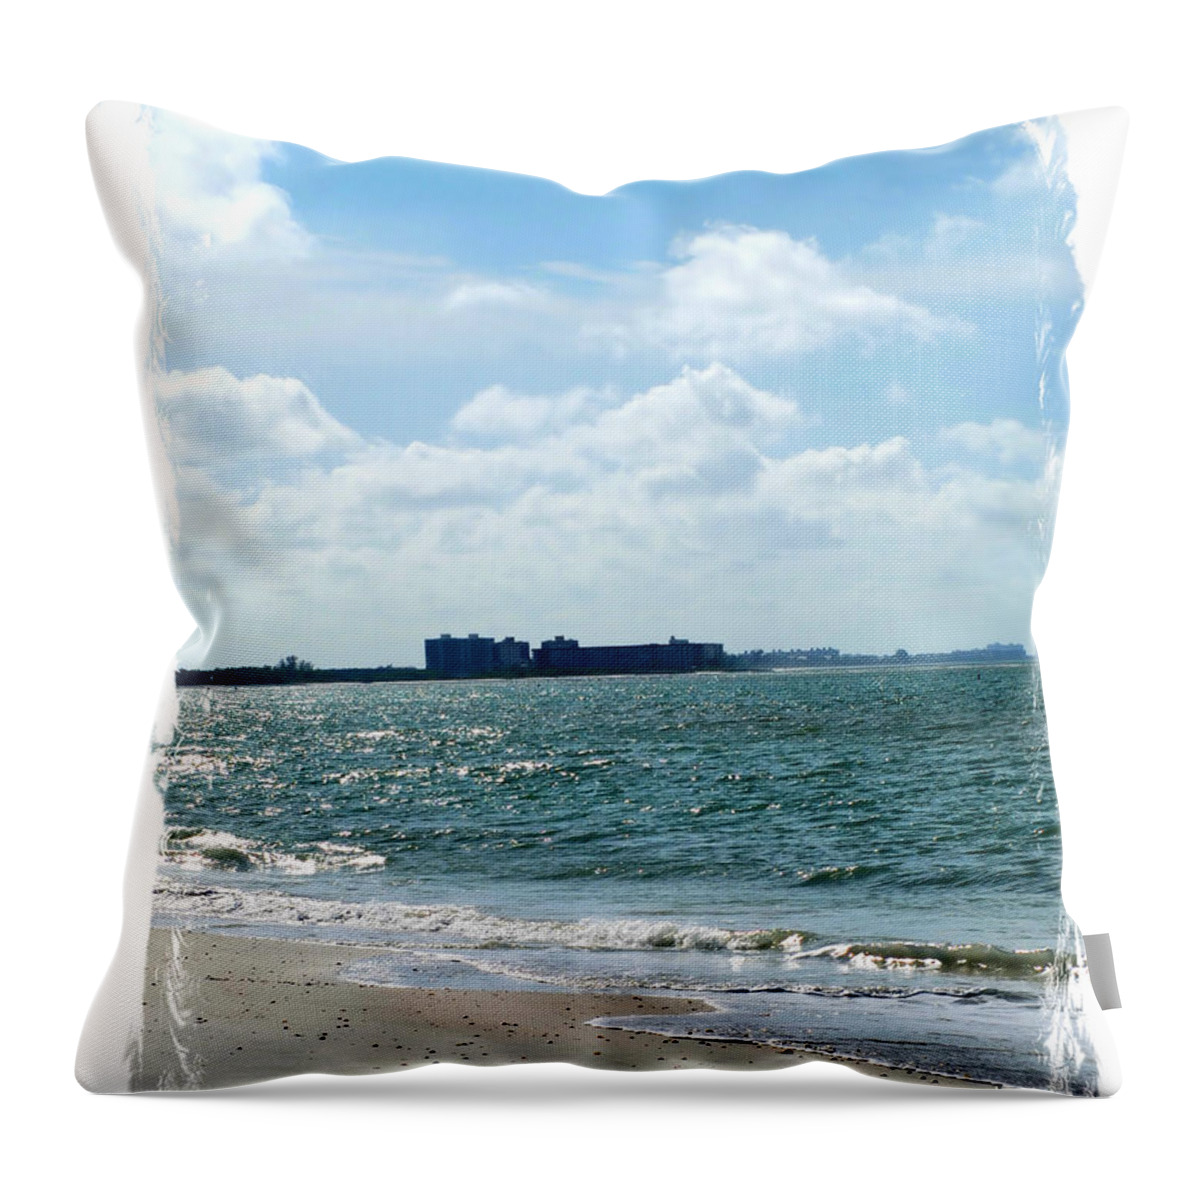 Lowers Key Beach Throw Pillow featuring the photograph Lovers Key Beach. Florida by Oksana Semenchenko